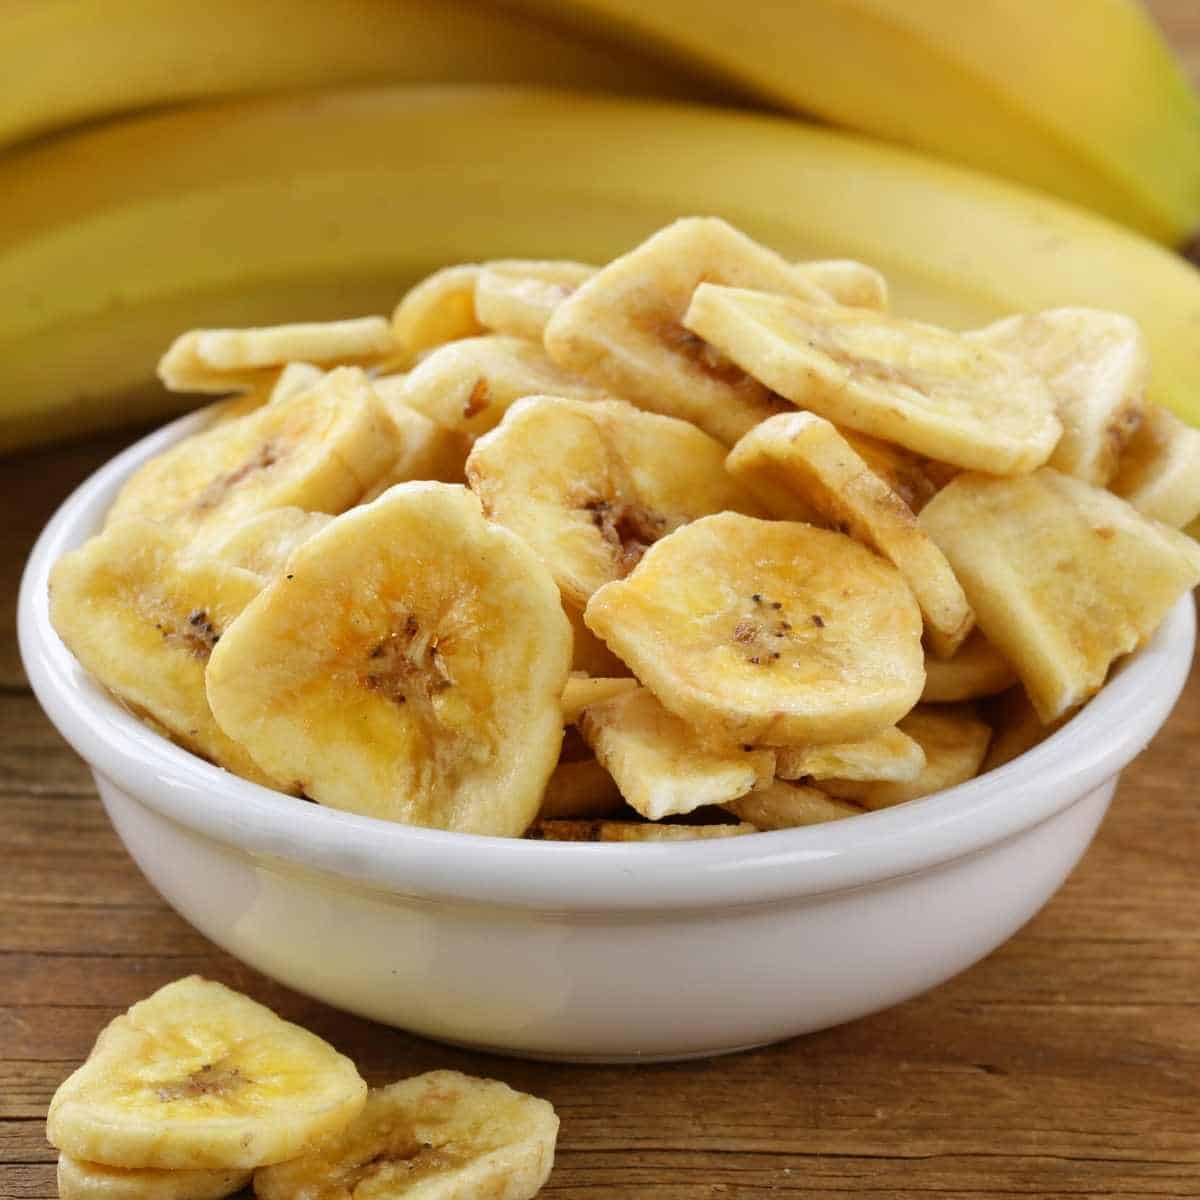 Homemade Banana Chips